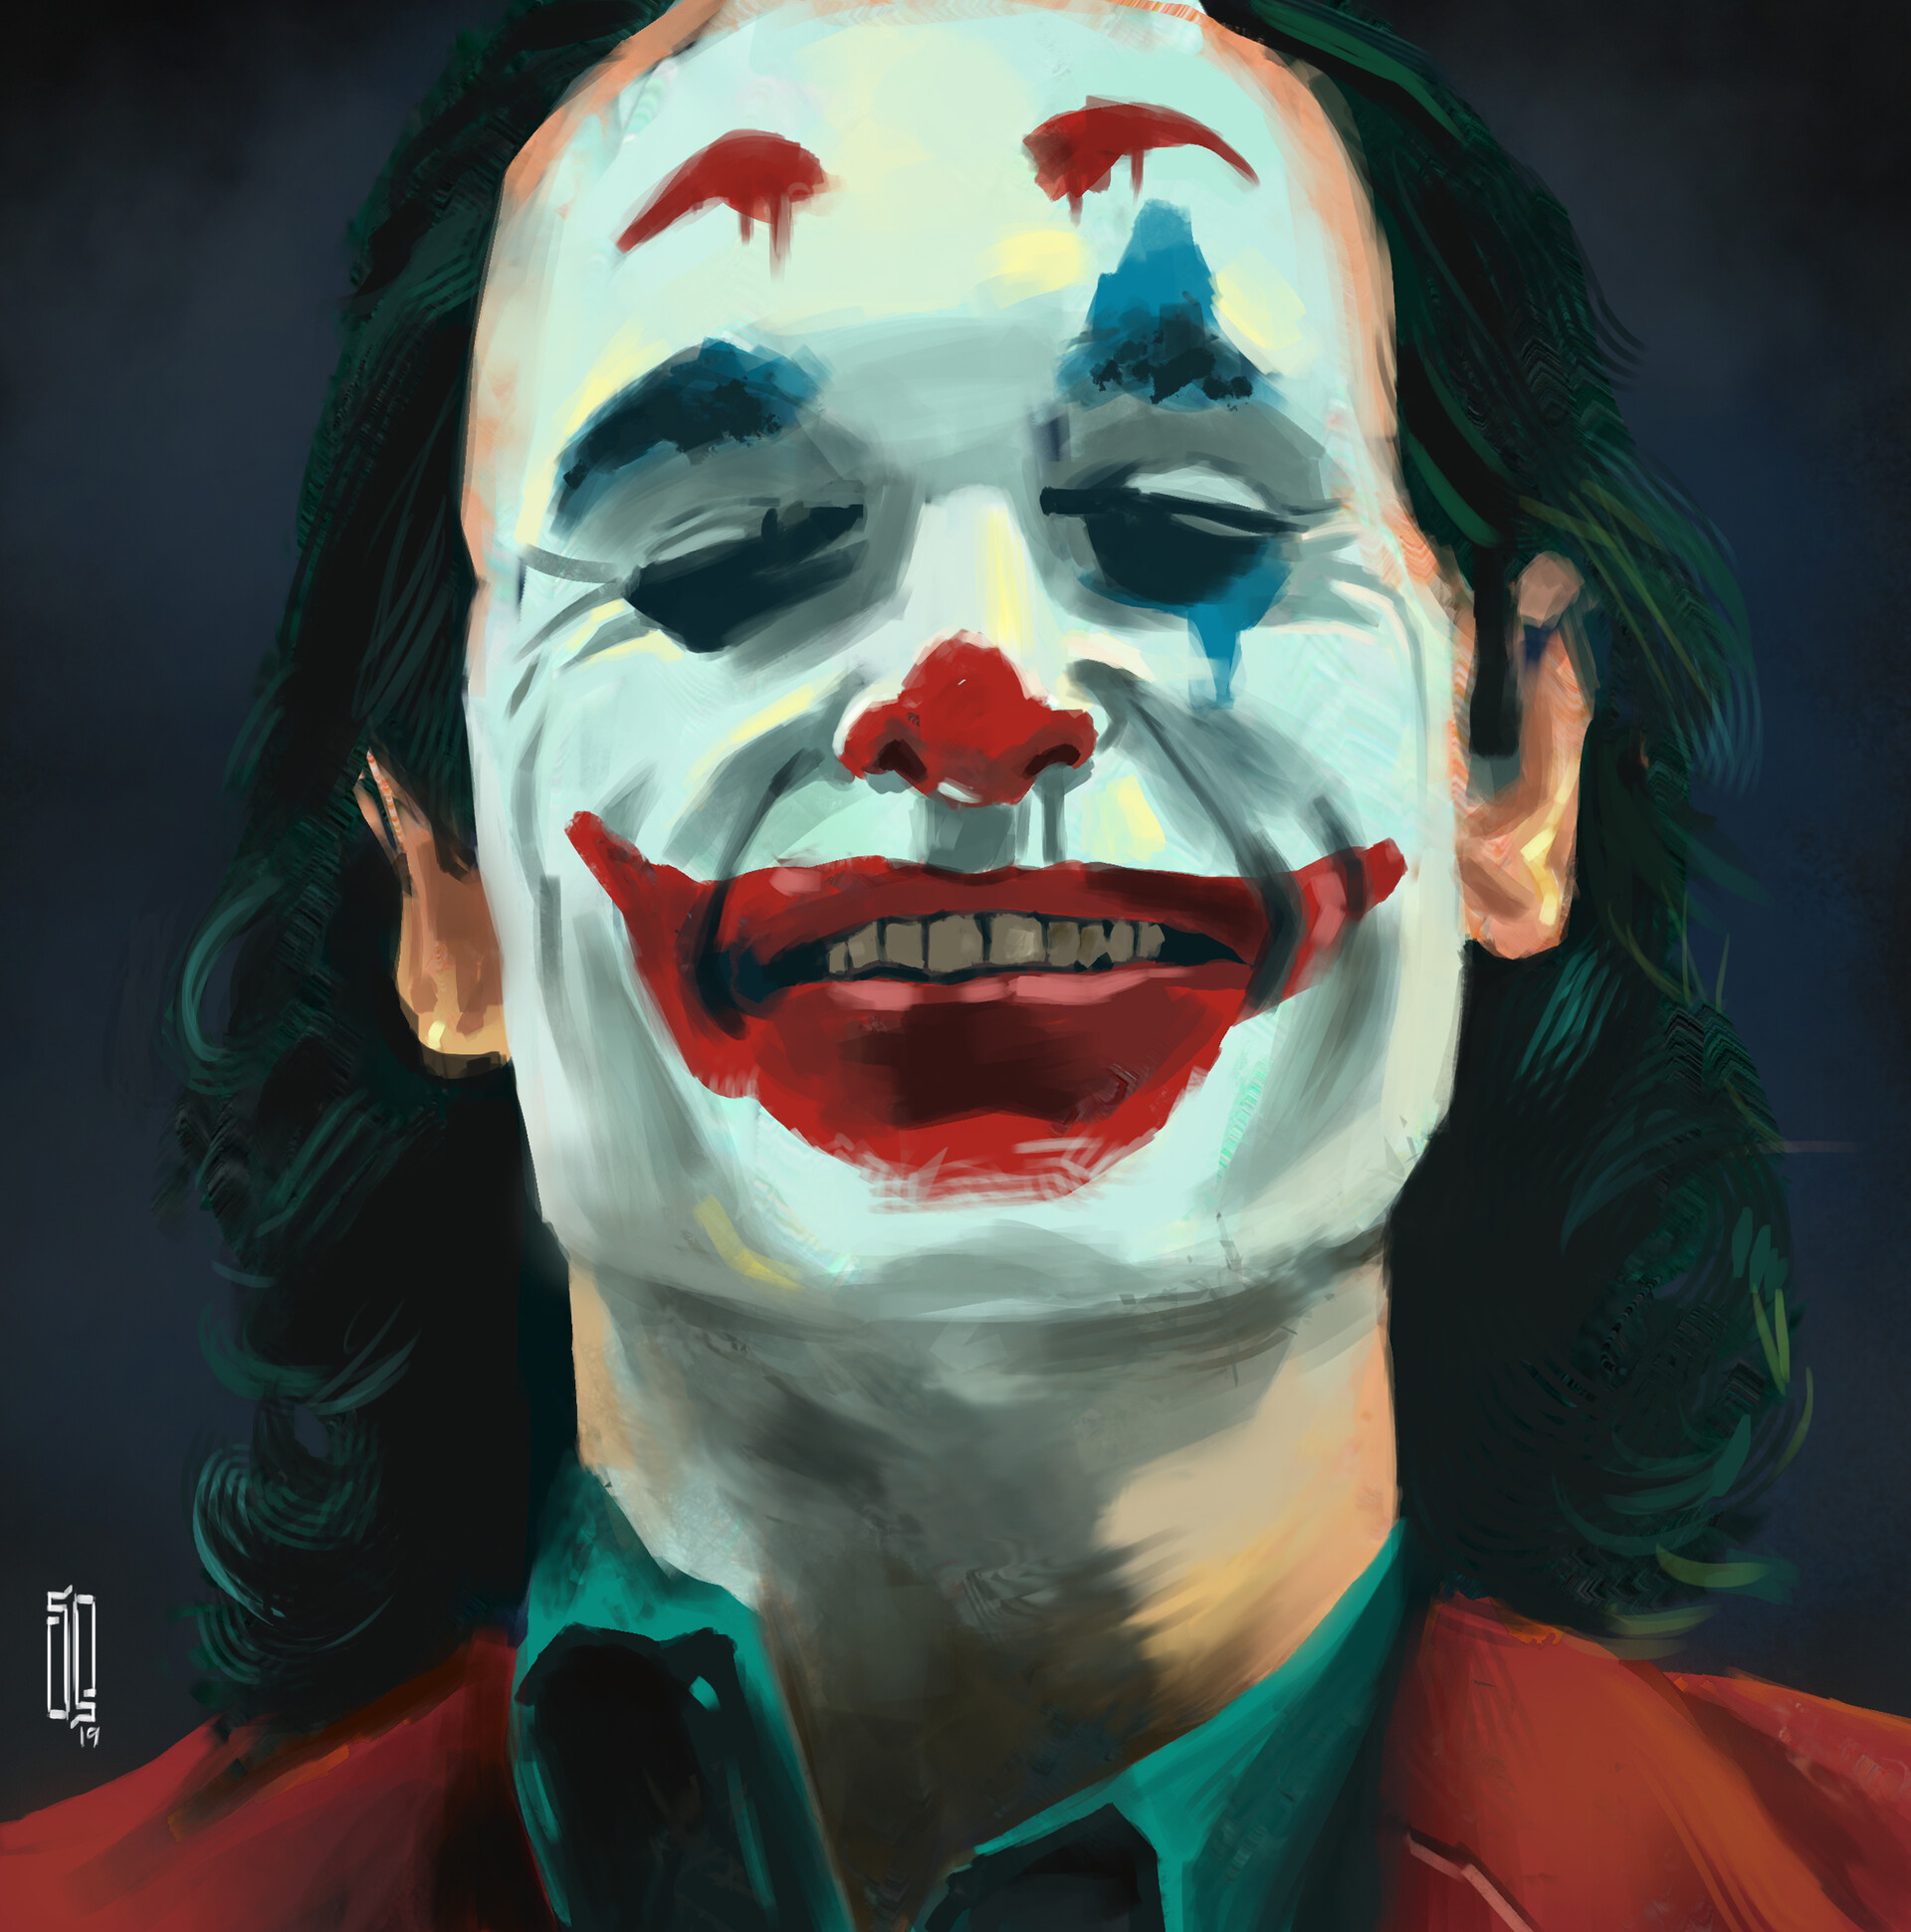 ArtStation - portrait study - Joker